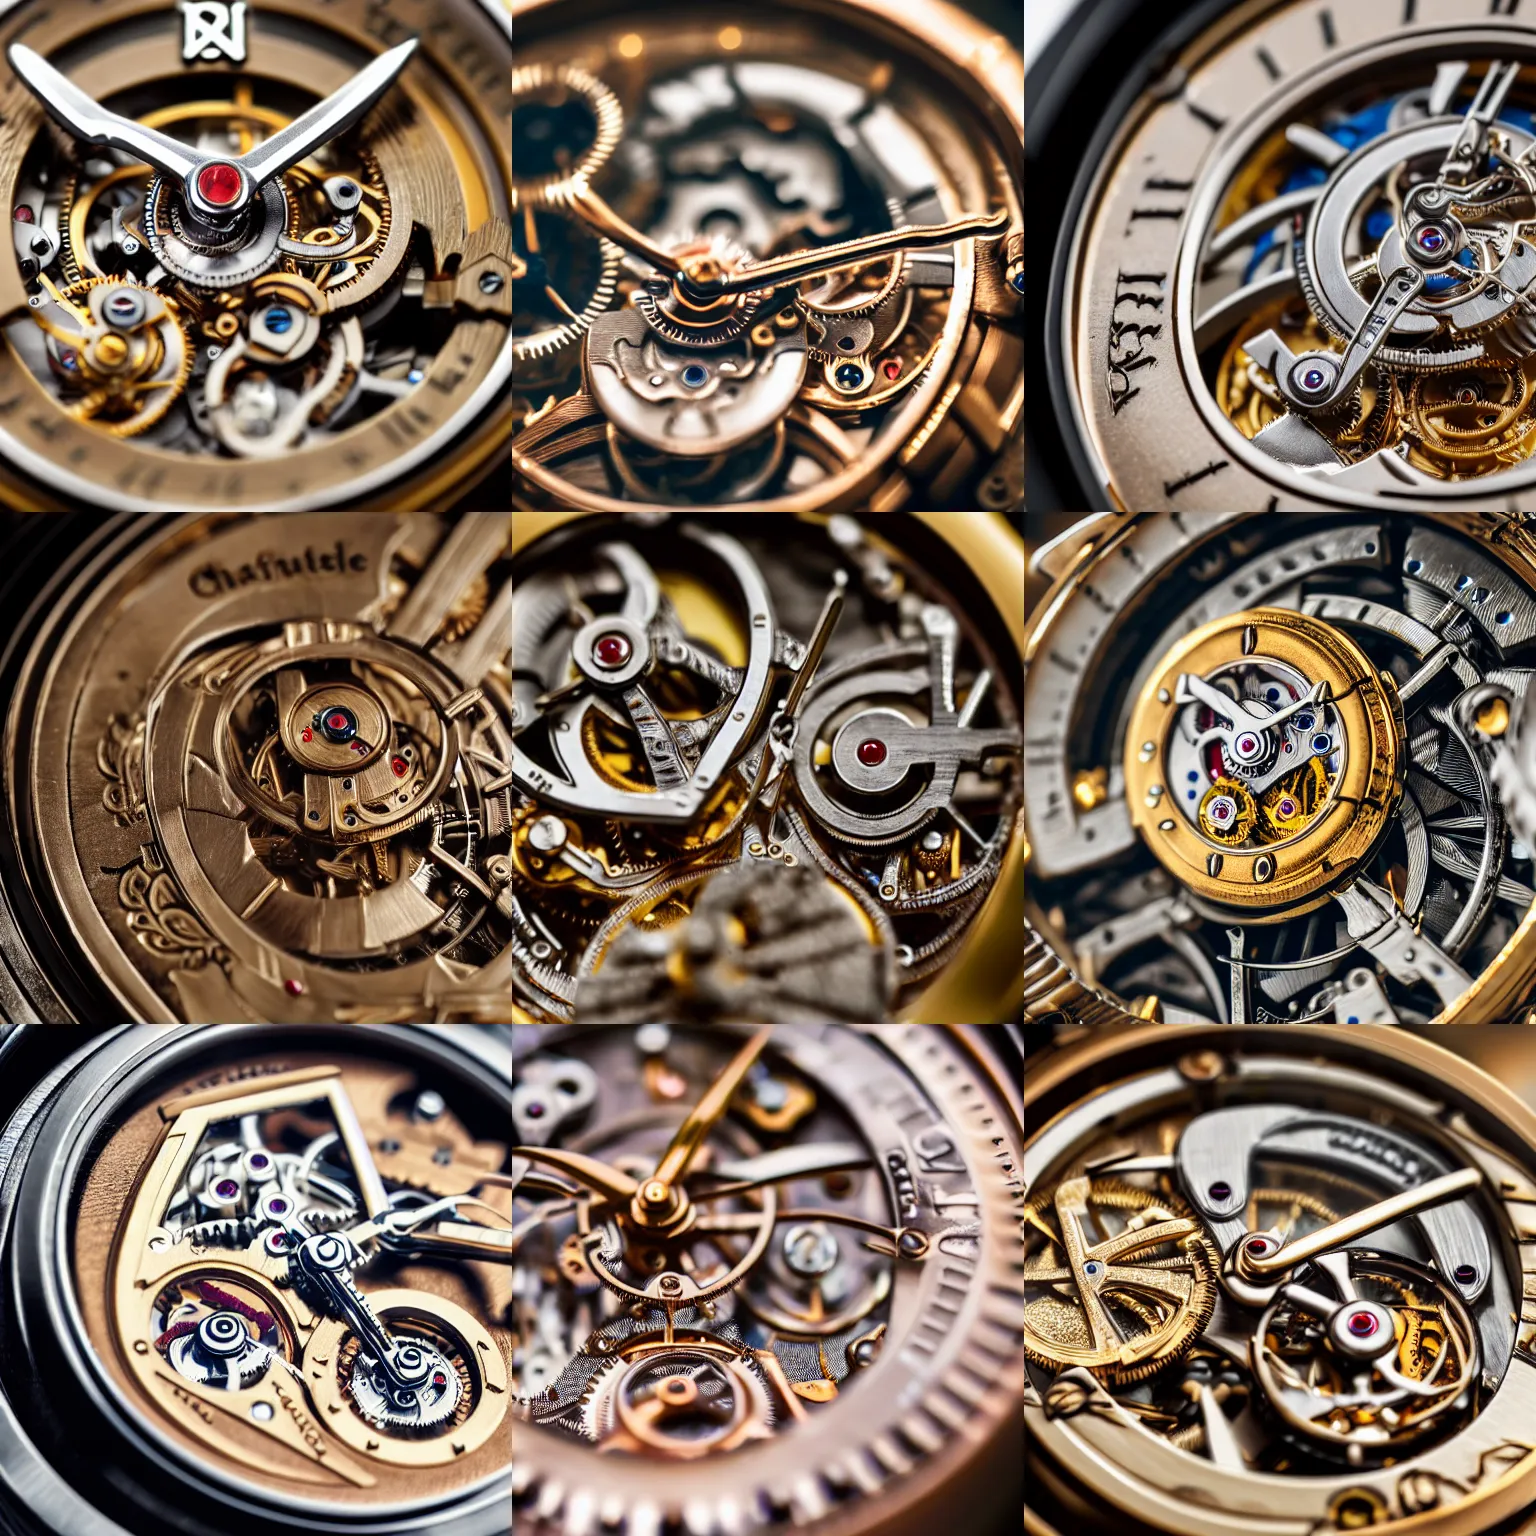 Prompt: Macro photograph of a beautiful miniature Swiss chalet on an intricate watch mechanism